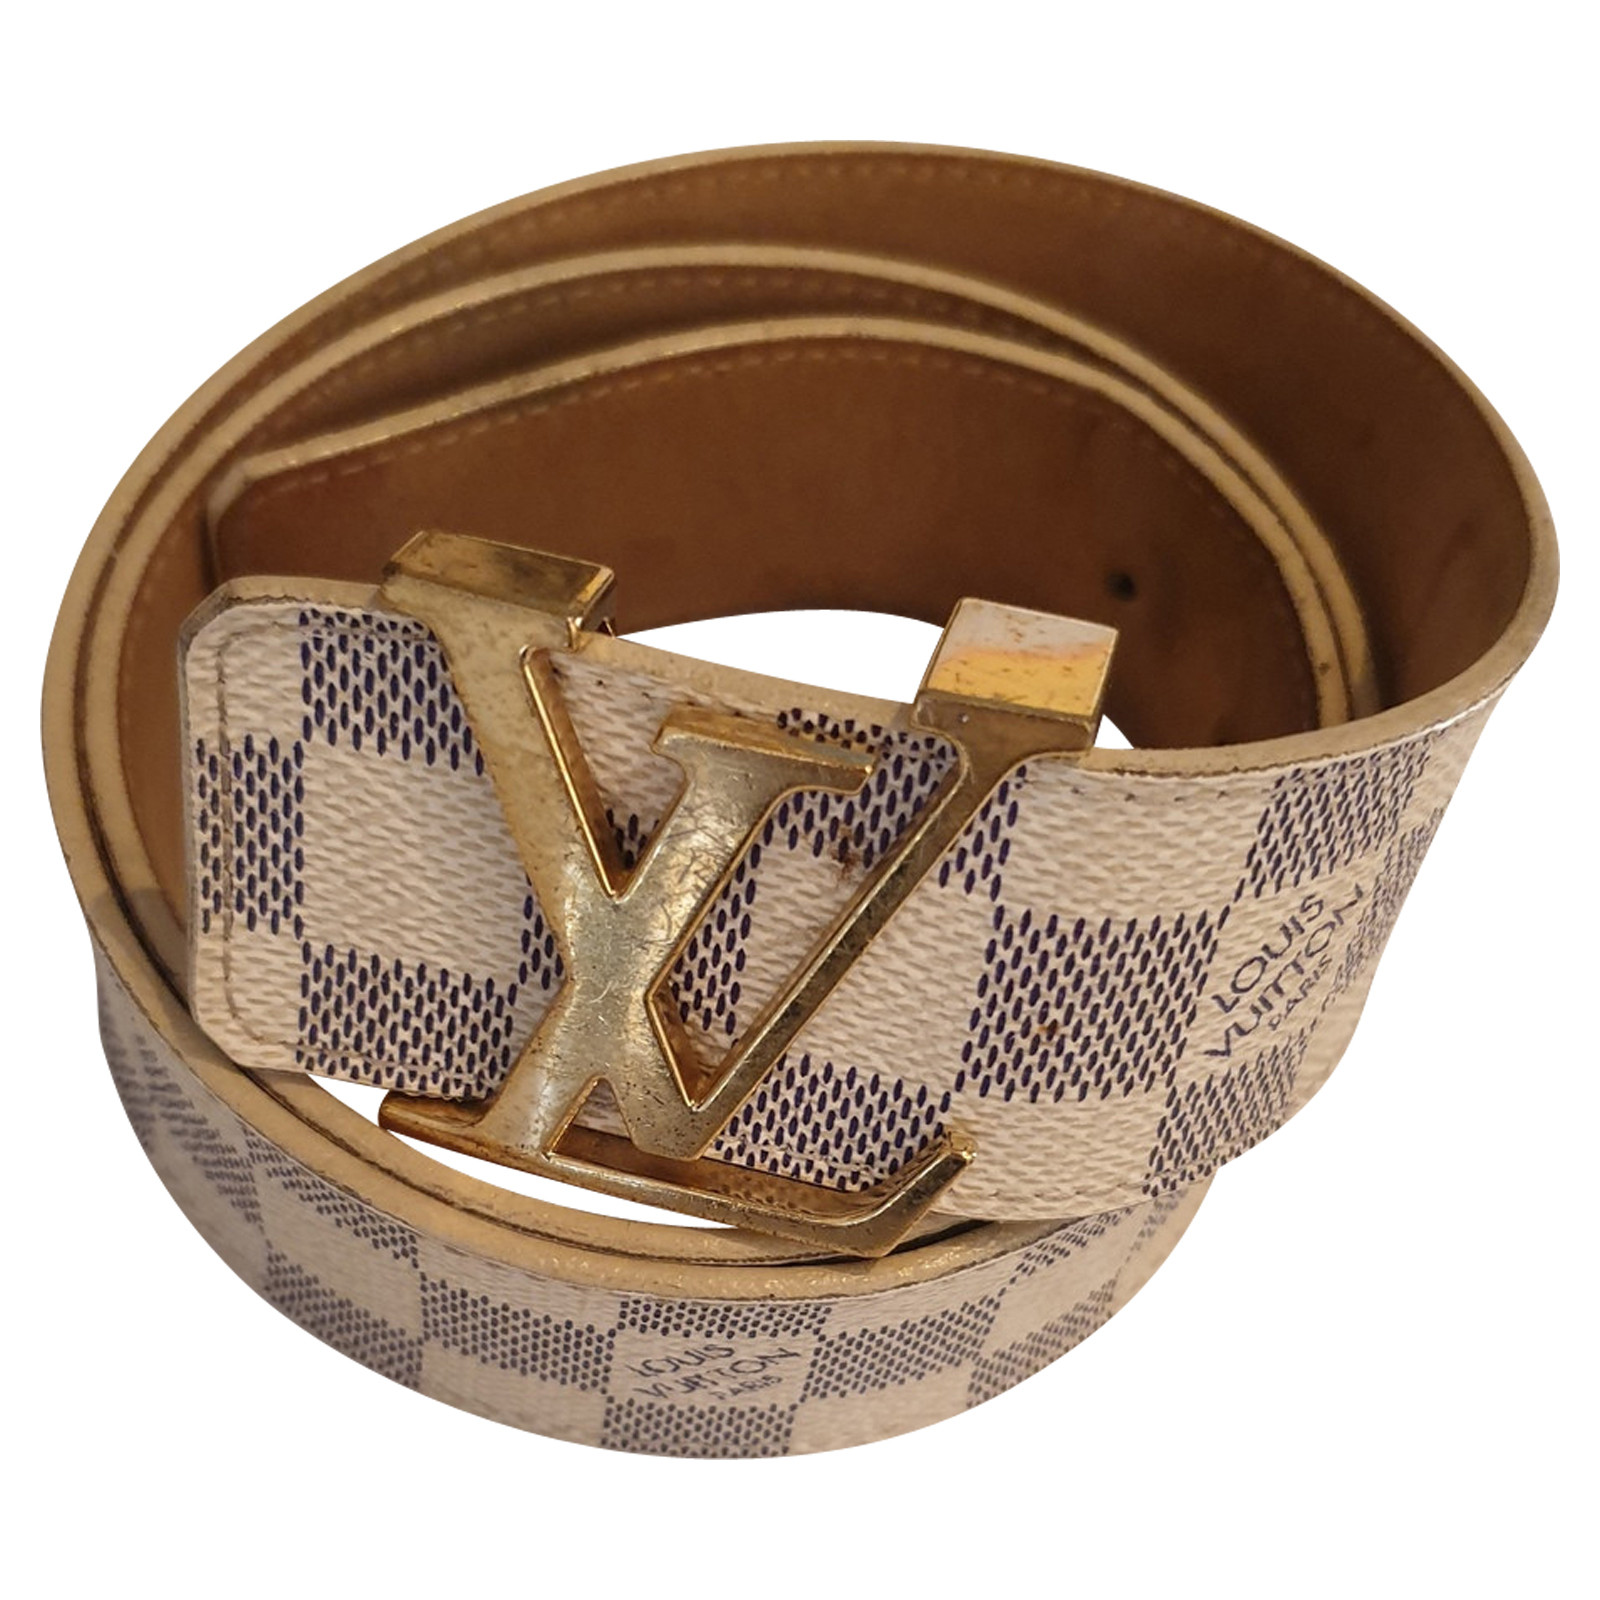 Louis Vuitton Belt in White - Second Hand Louis Vuitton Belt in White buy used for (4432711)